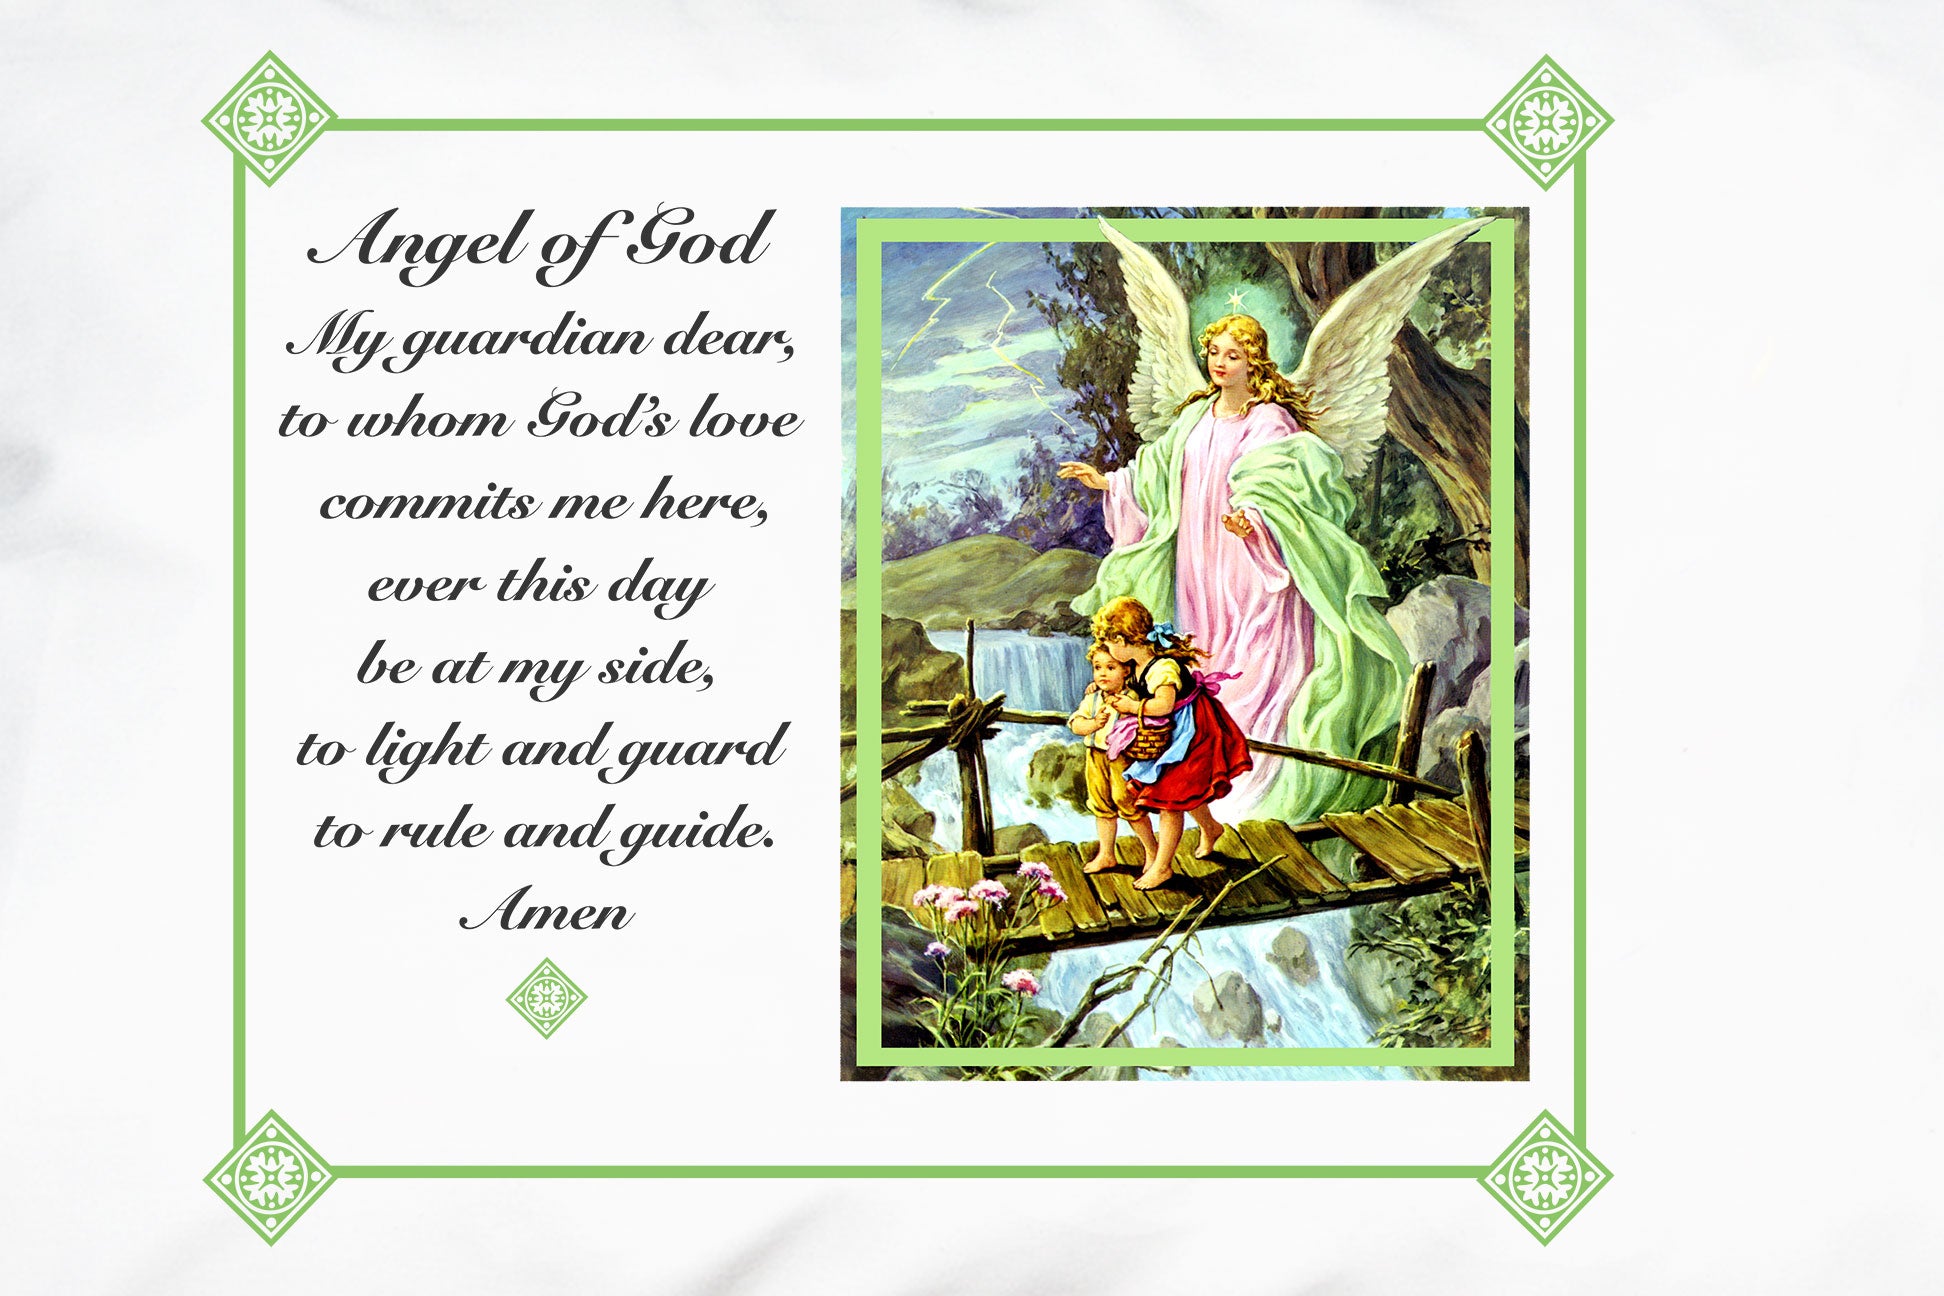 my guardian angel prayer